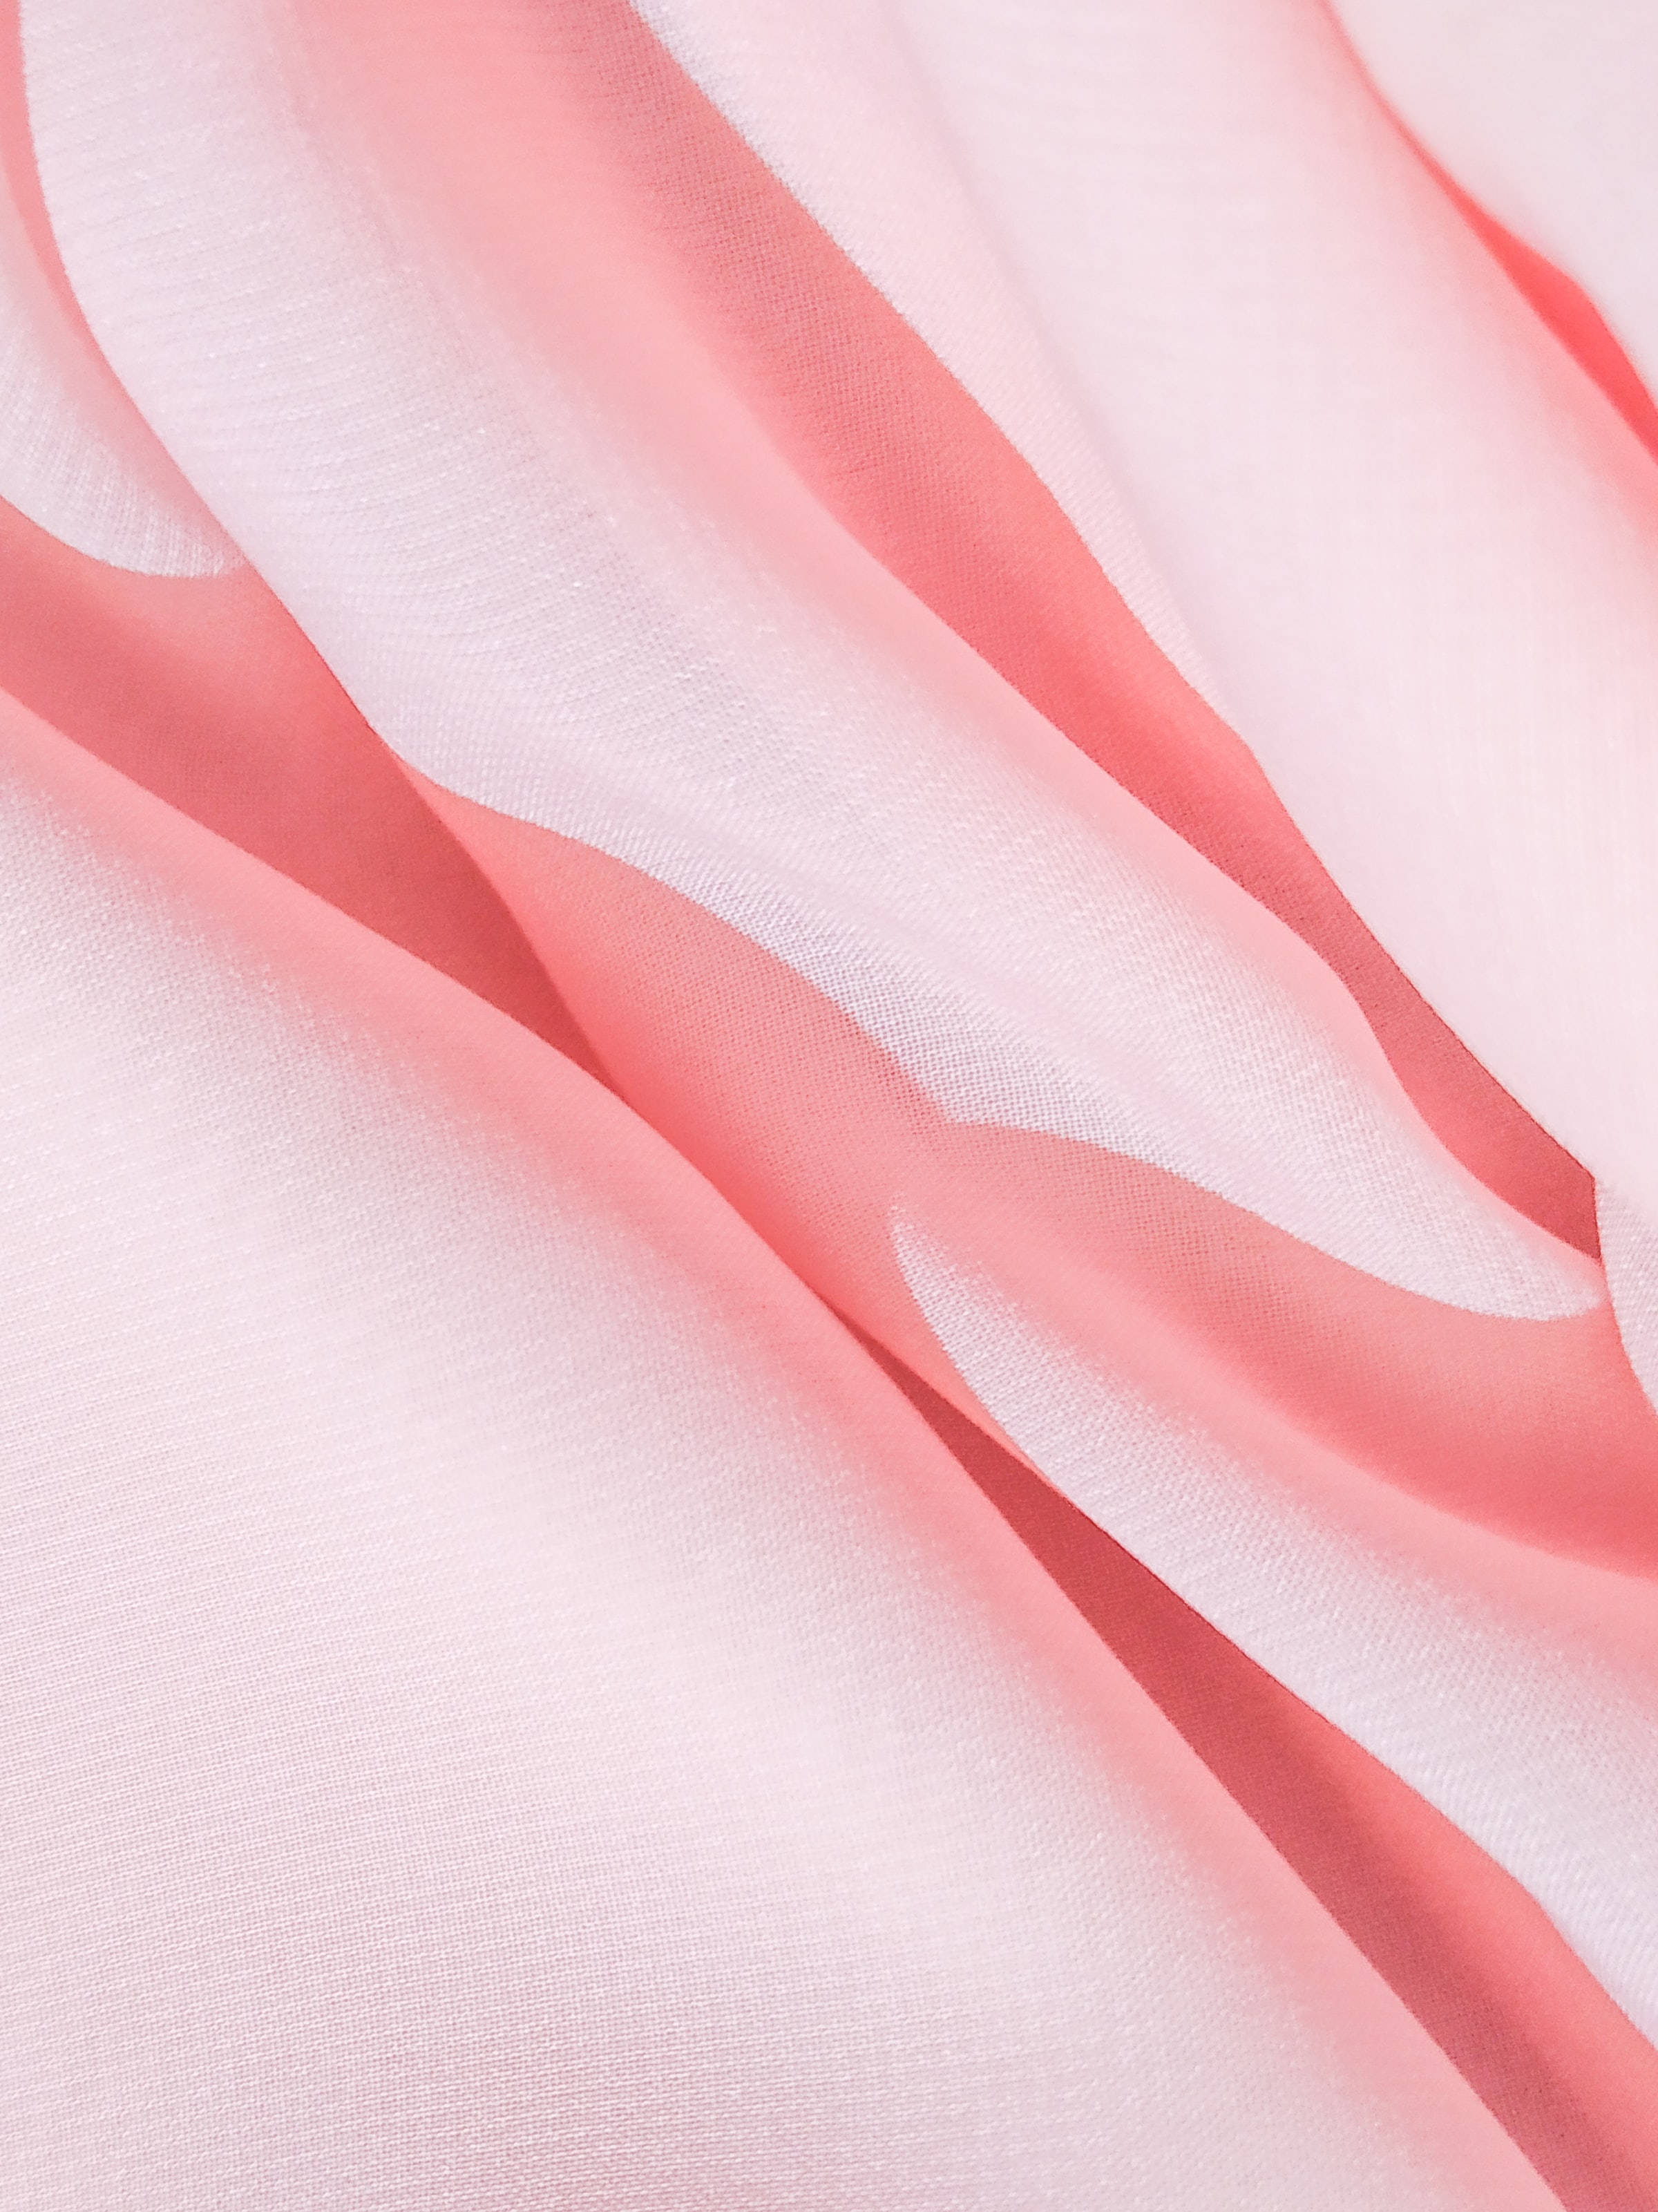 Cute Pink Aesthetic Silk Fabric Texture Wallpaper